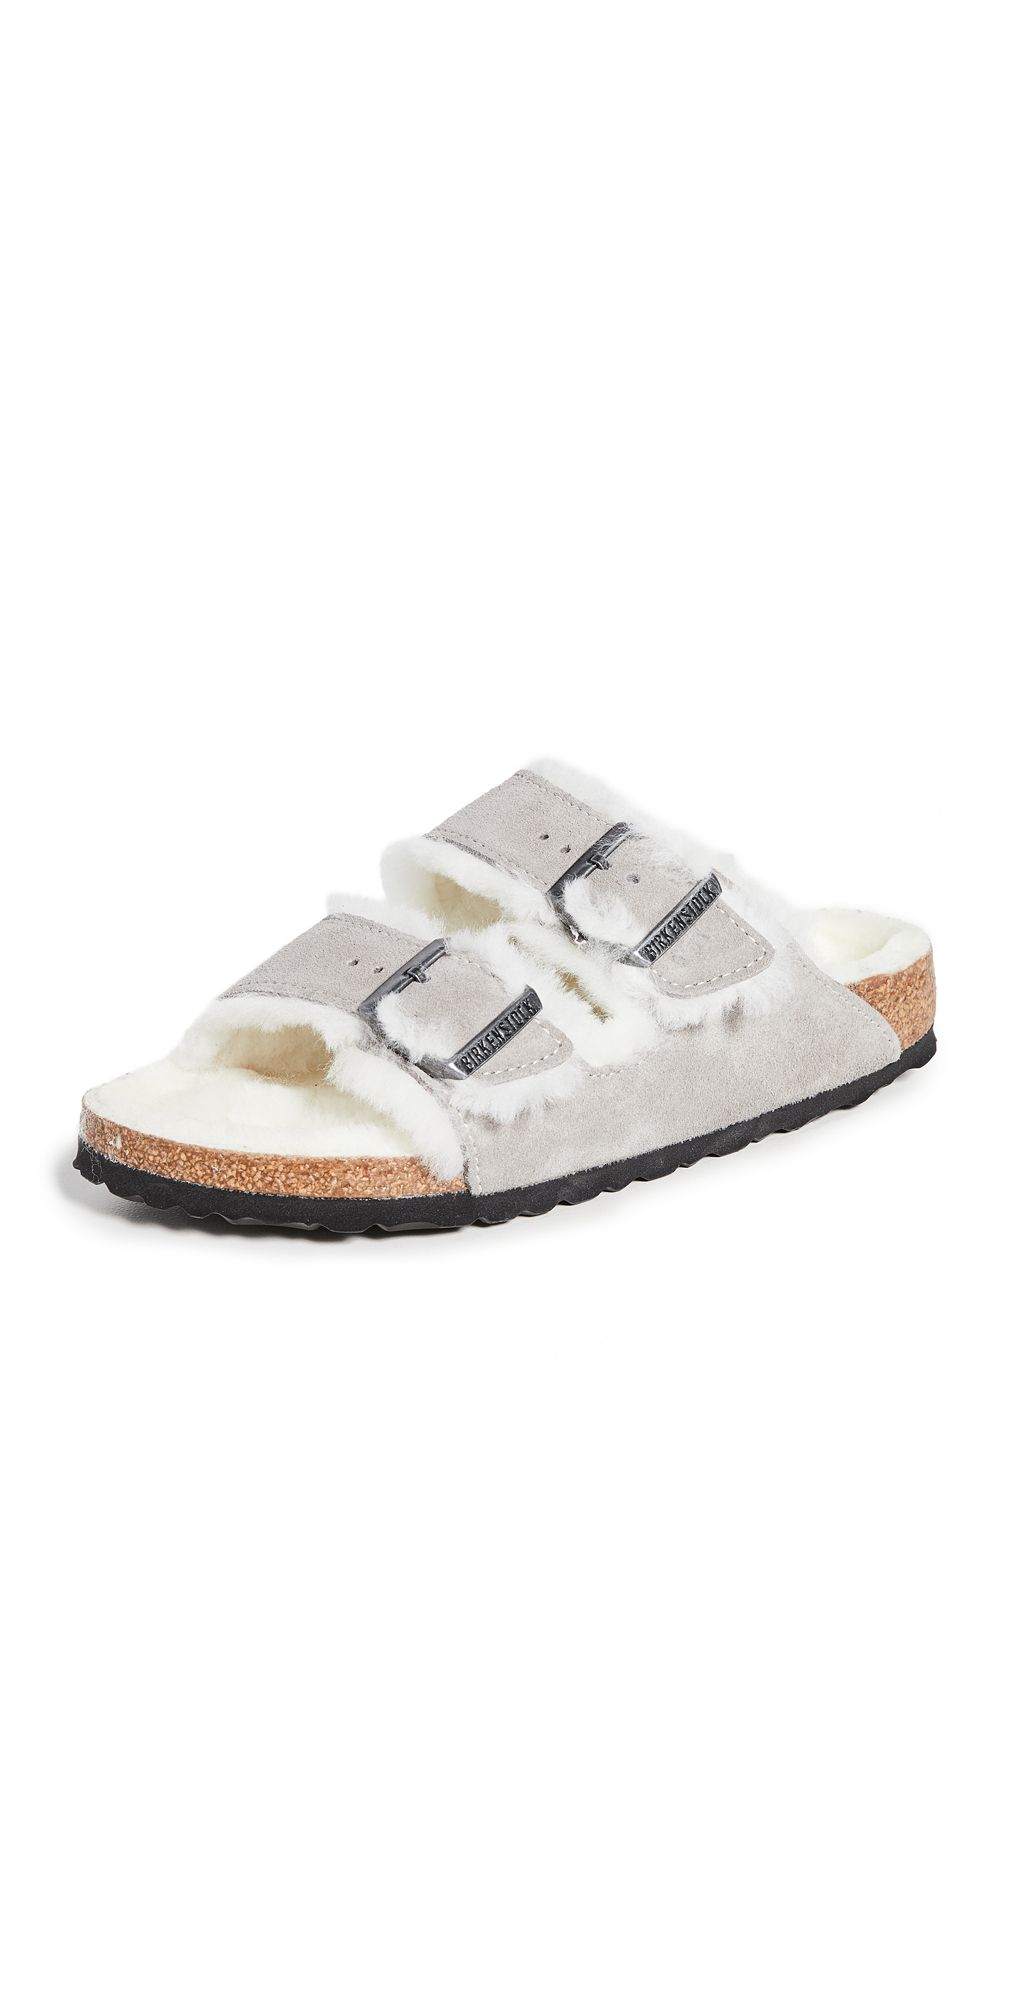 Arizona Shearling Sandals | Shopbop